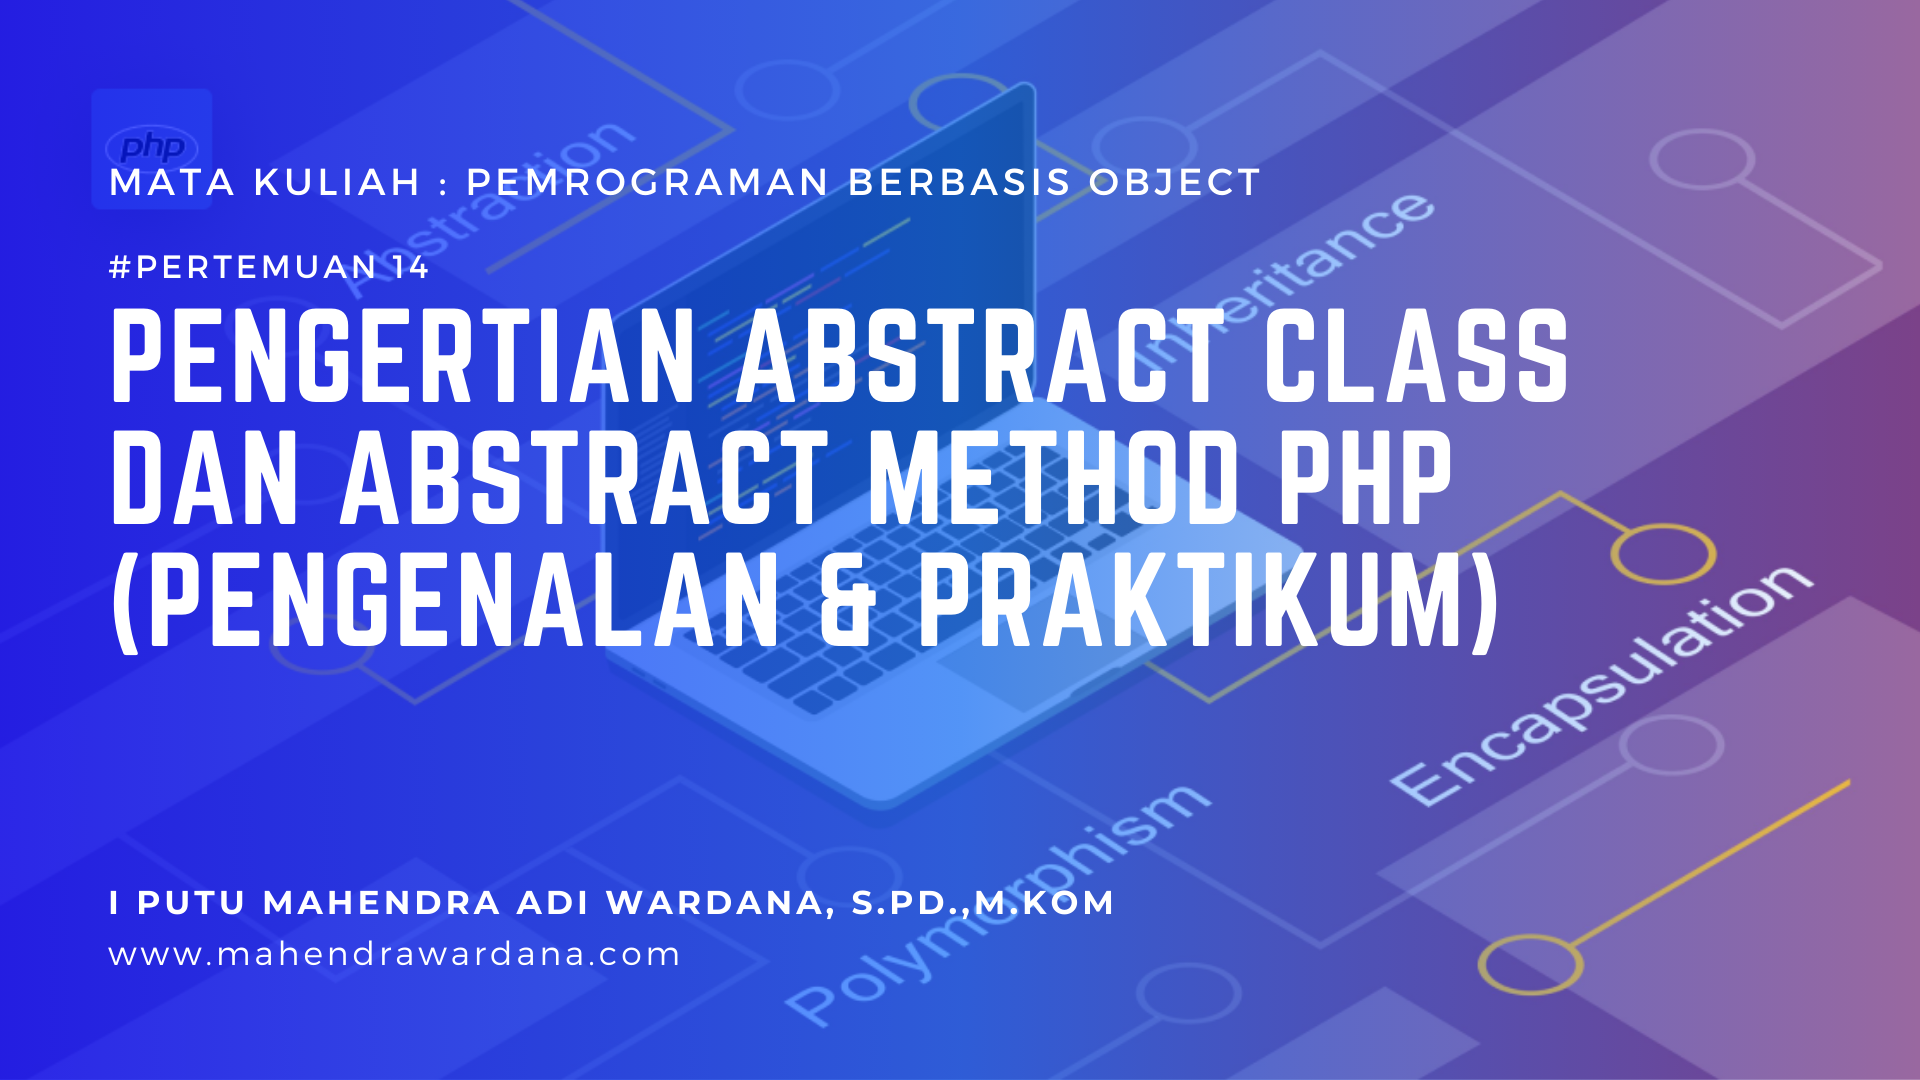 Pertemuan 14 - Pengertian Abstract Class dan Abstract Method PHP (Pengenalan & Praktikum)